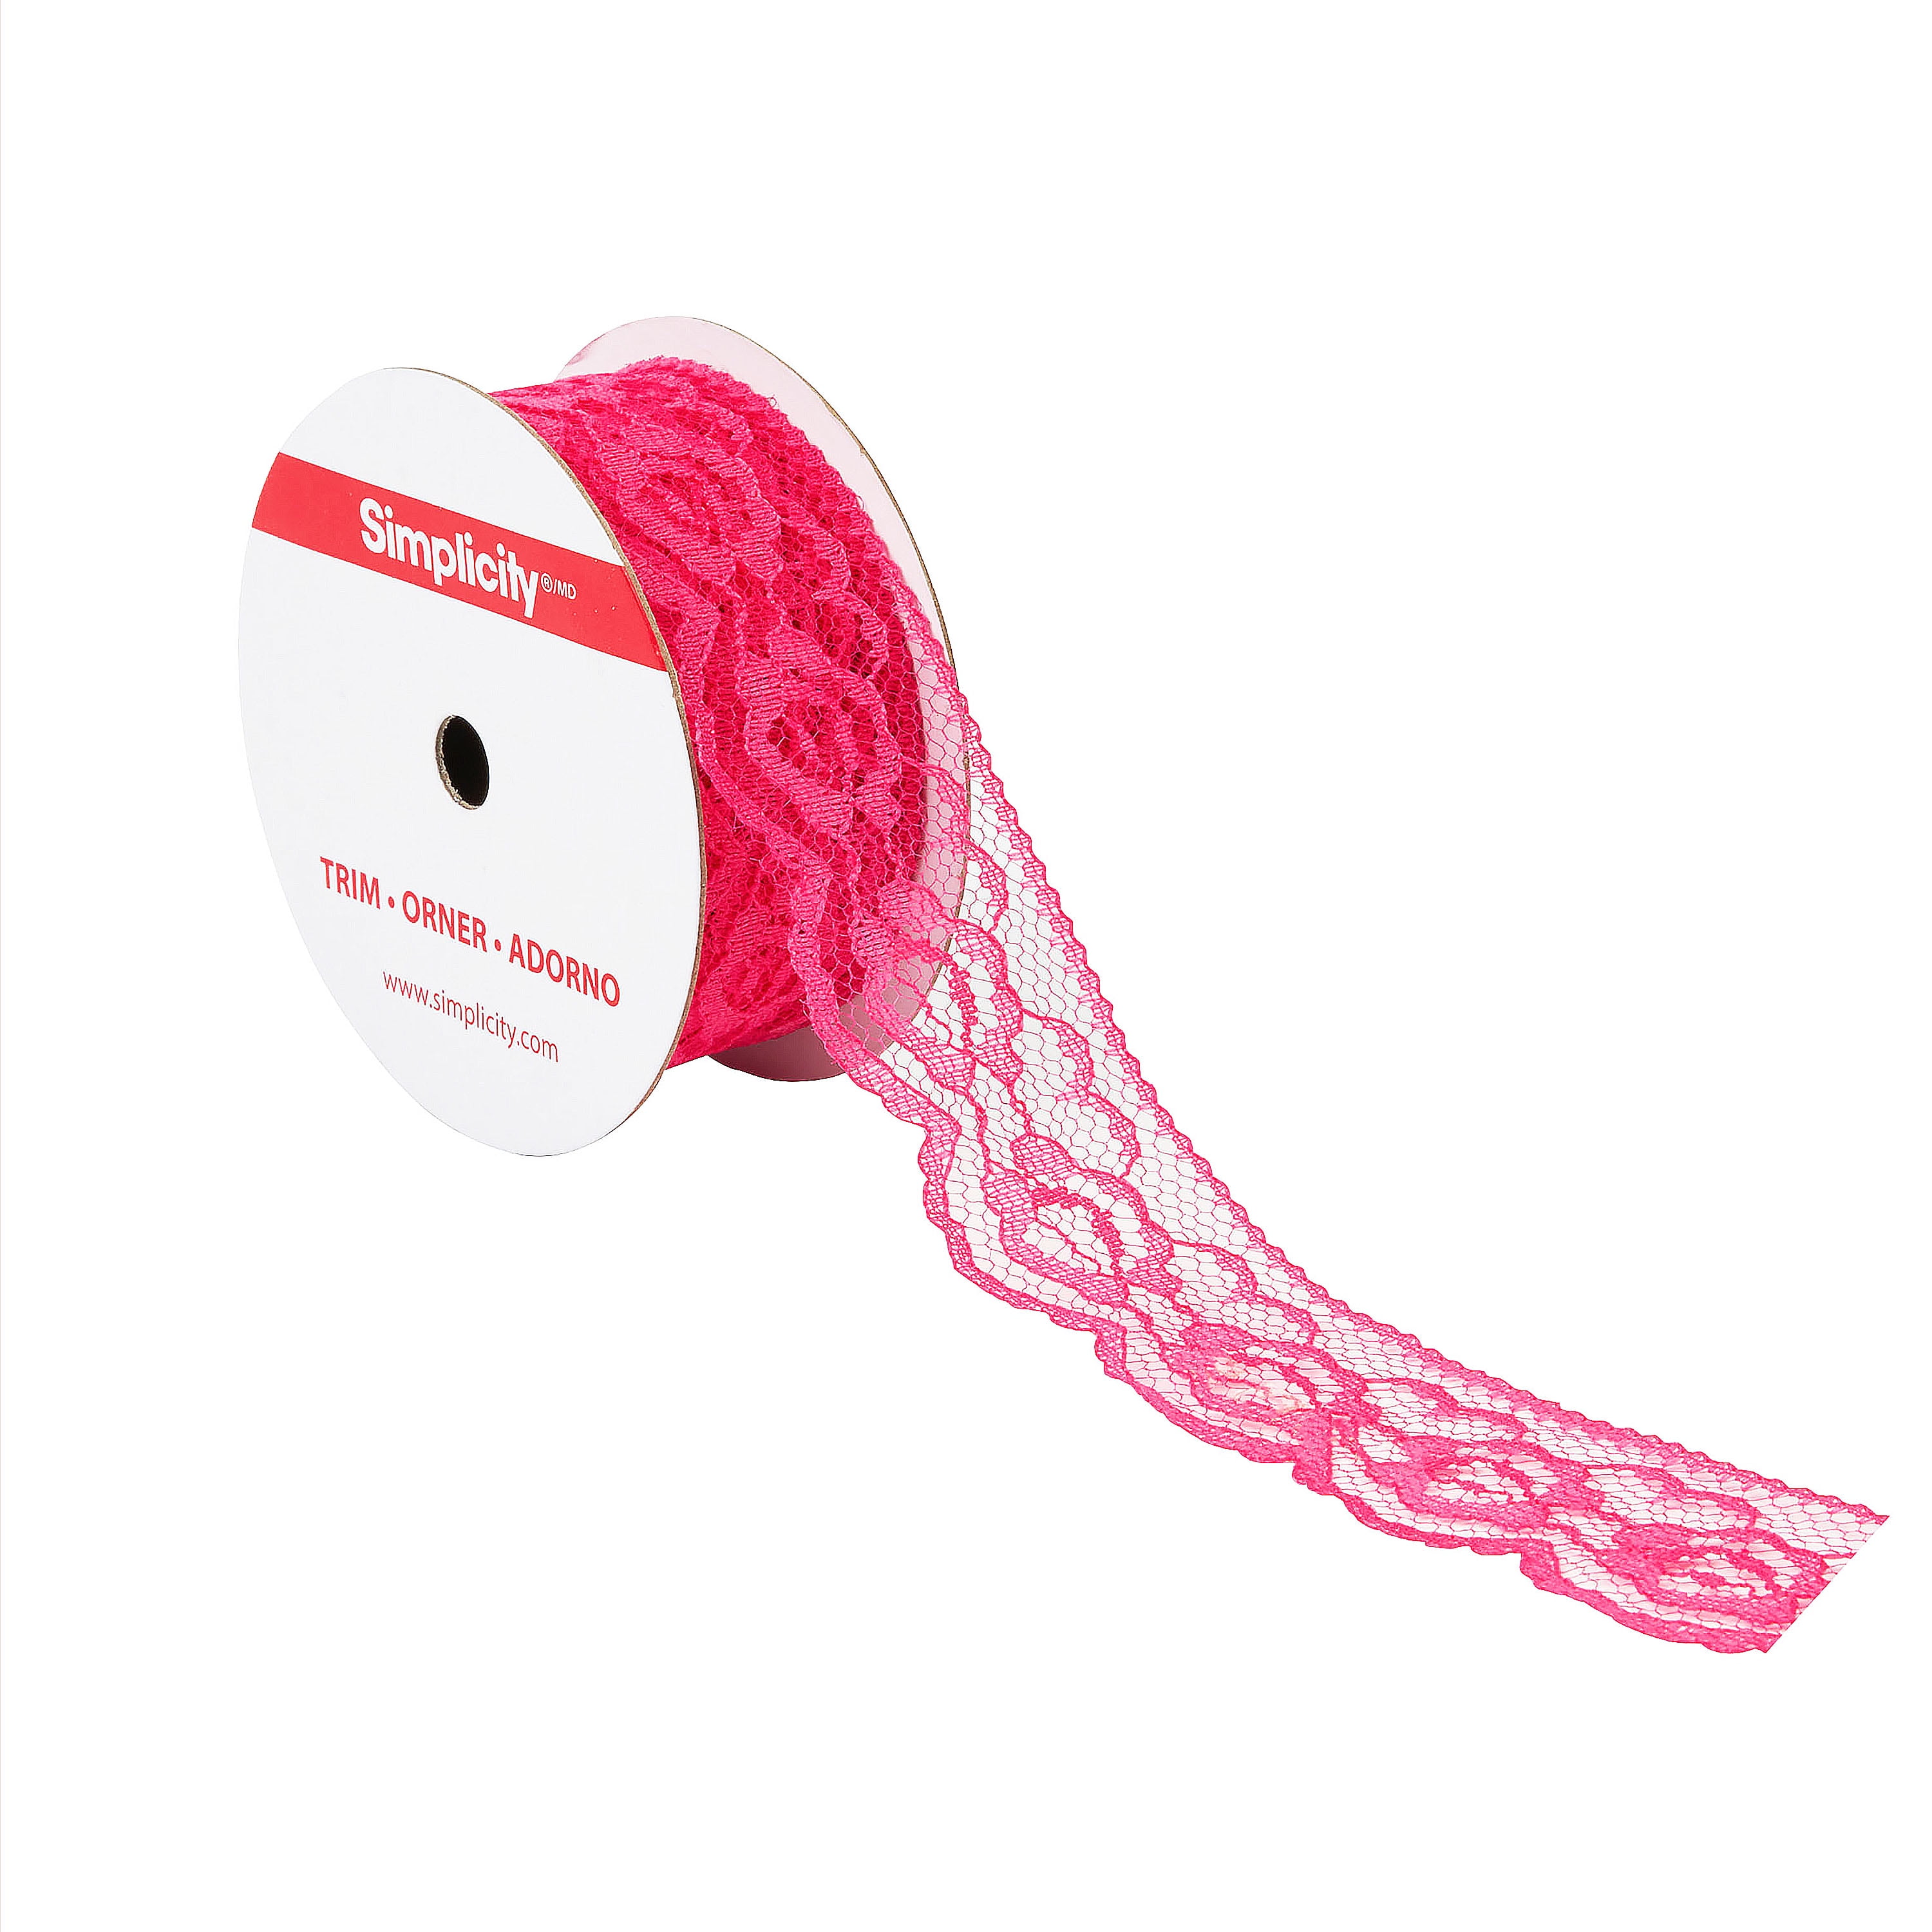 Primrose Pink Ruffled Stretch Lace Trimming - 1